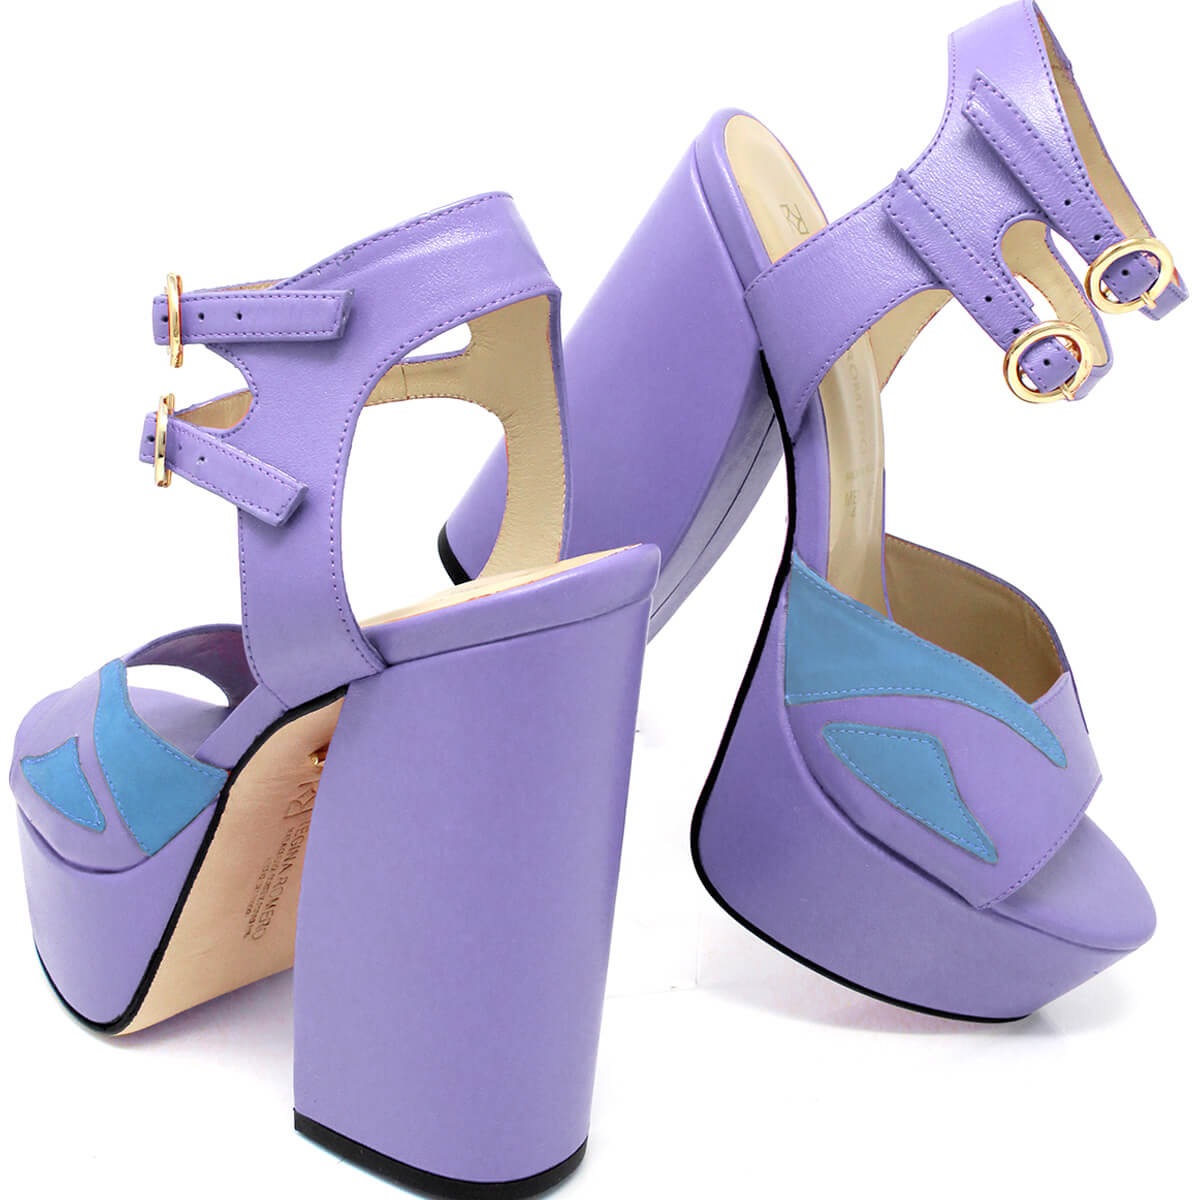 SUNNY 135 - Lila y Azul Regina Romero Zapato Sandalia Plataforma Tacon Alto Para Dama en Piel